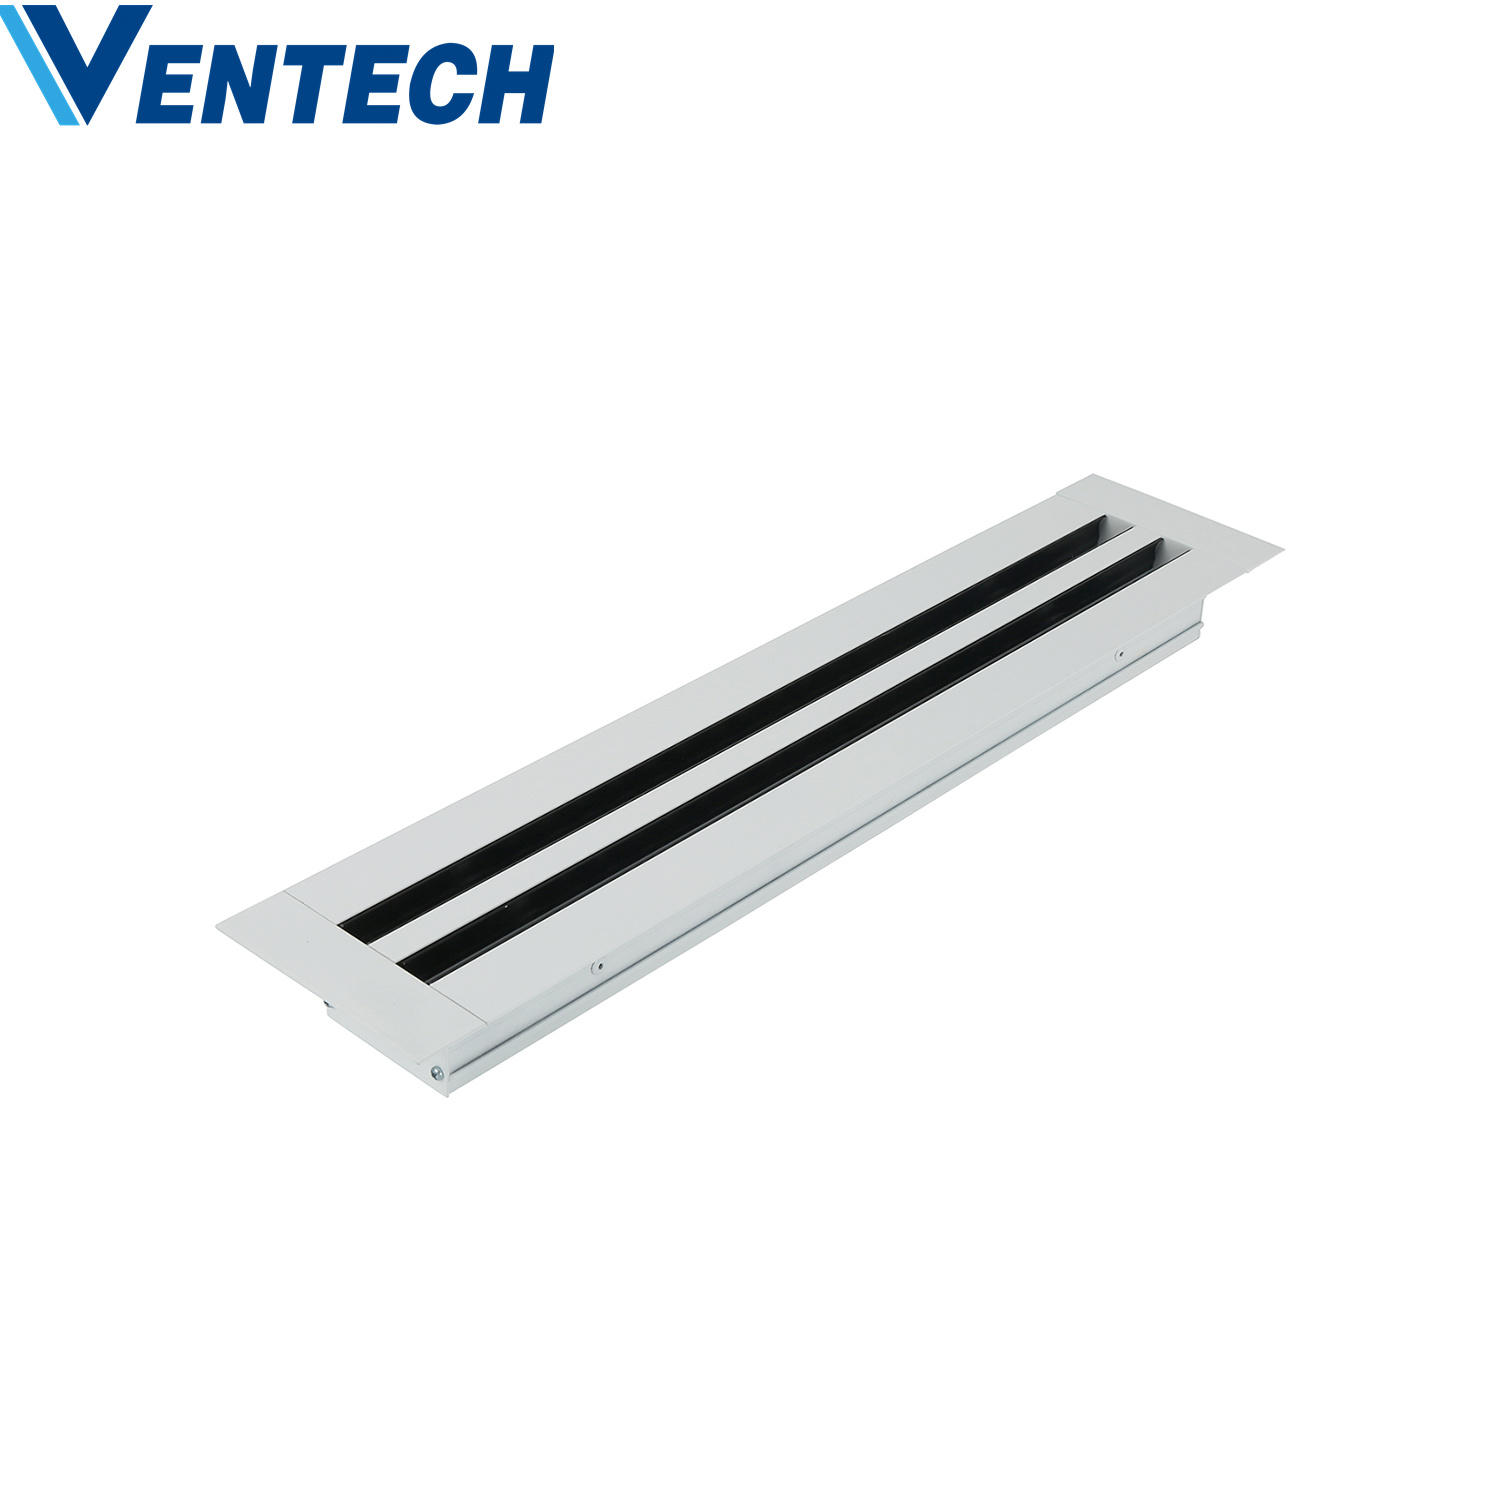 Hvac Exhaust Ventilation Air Duct Supply Linear Slot Price Ceiling Conditioning Aluminium Linear Slot Diffusers Plenum Box